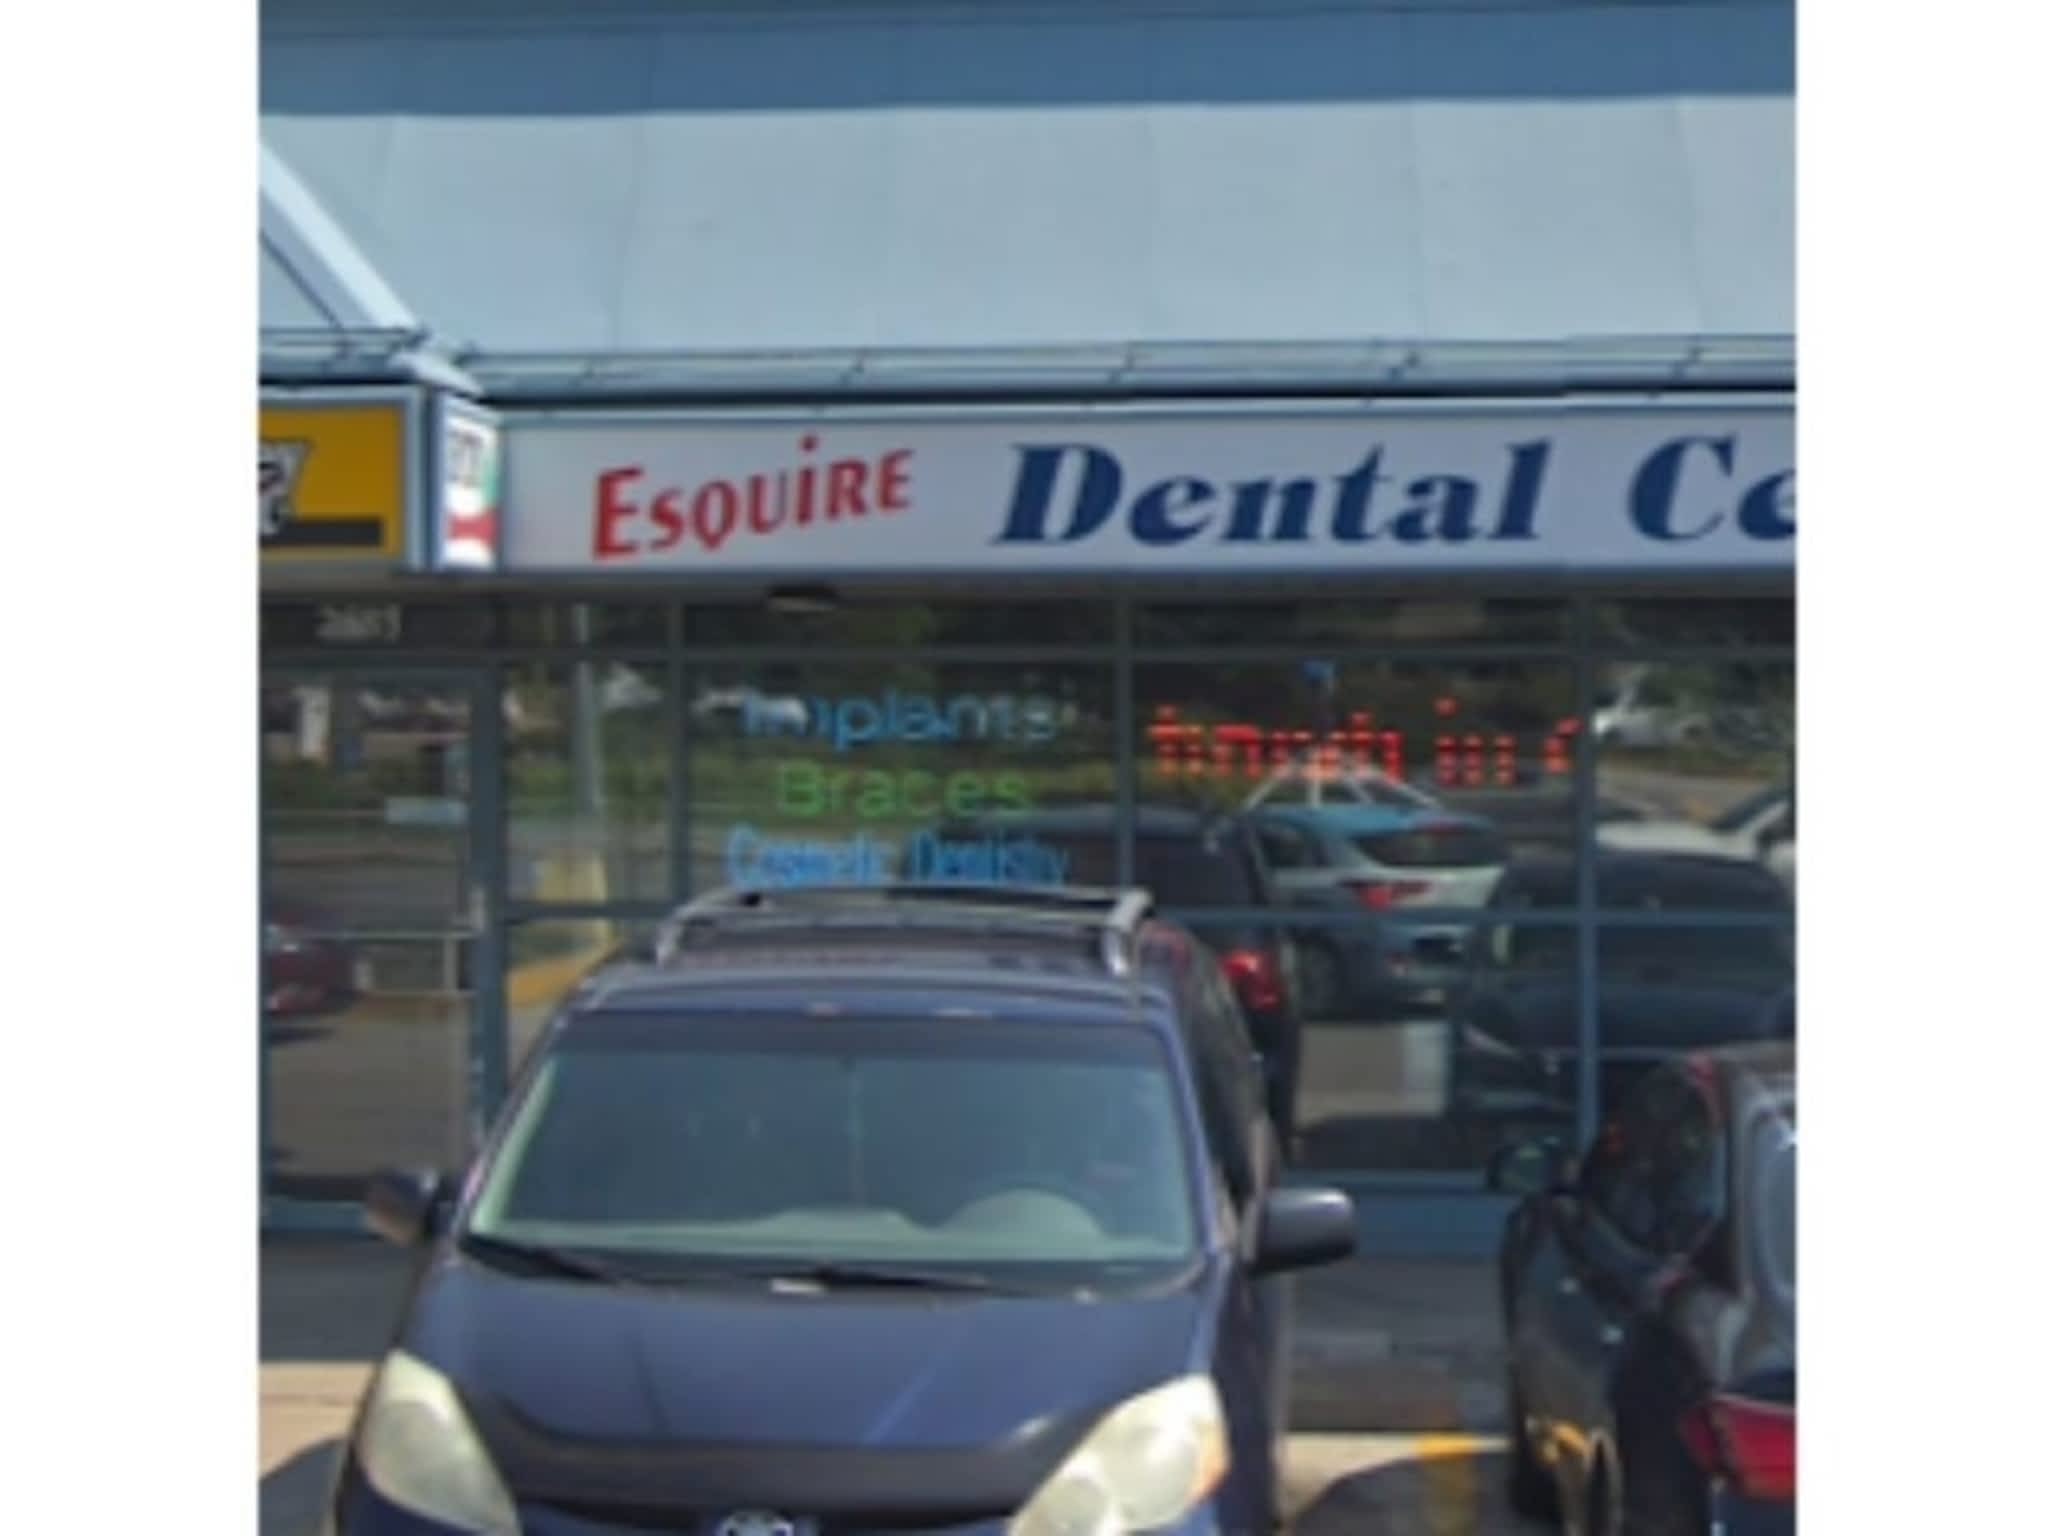 photo Esquire Dental Centres